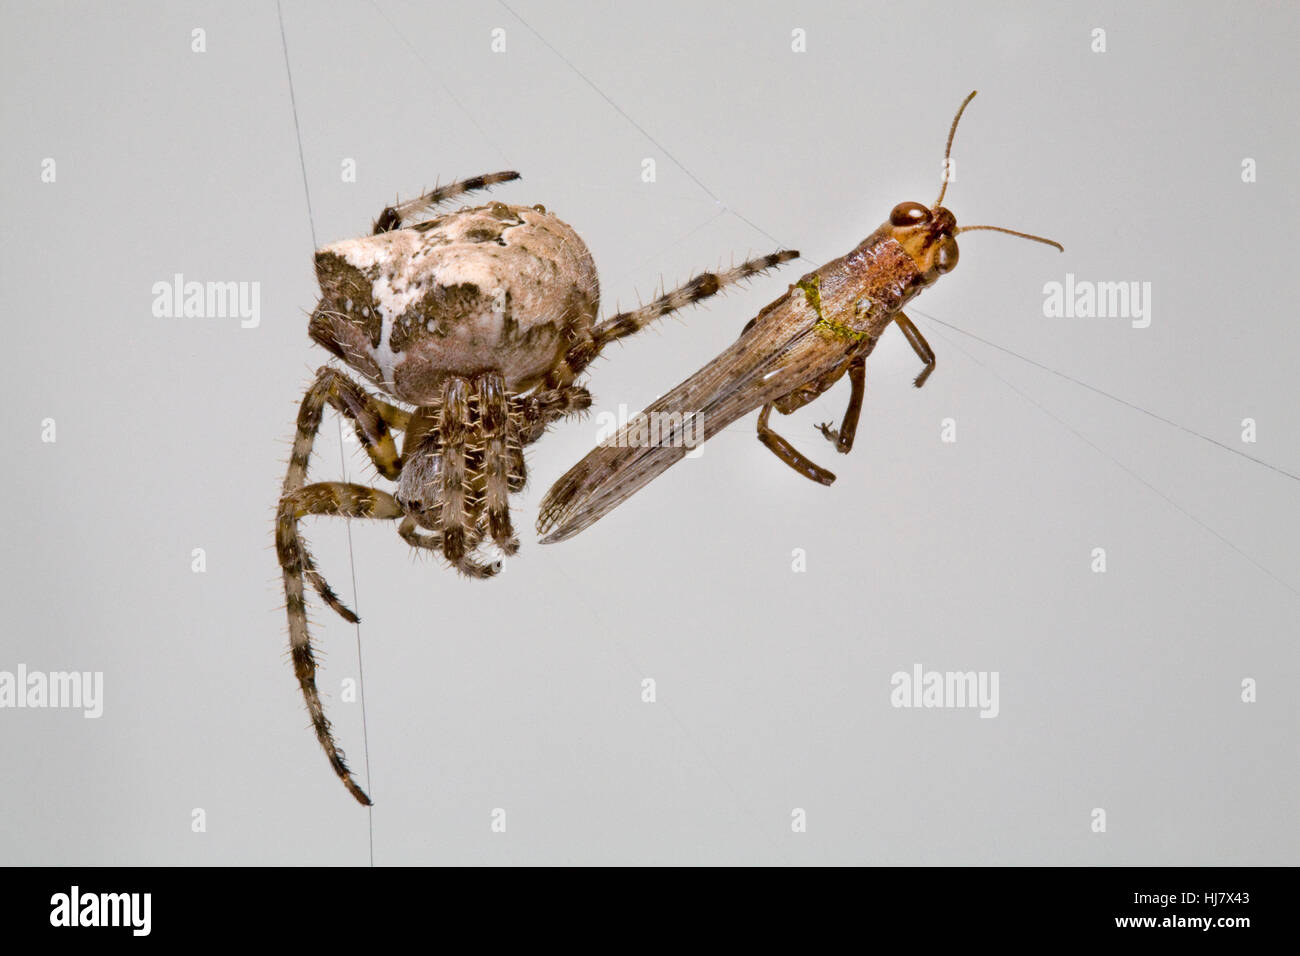 A cross orbweaver spider, Araneus diadematus, in her web Stock Photo